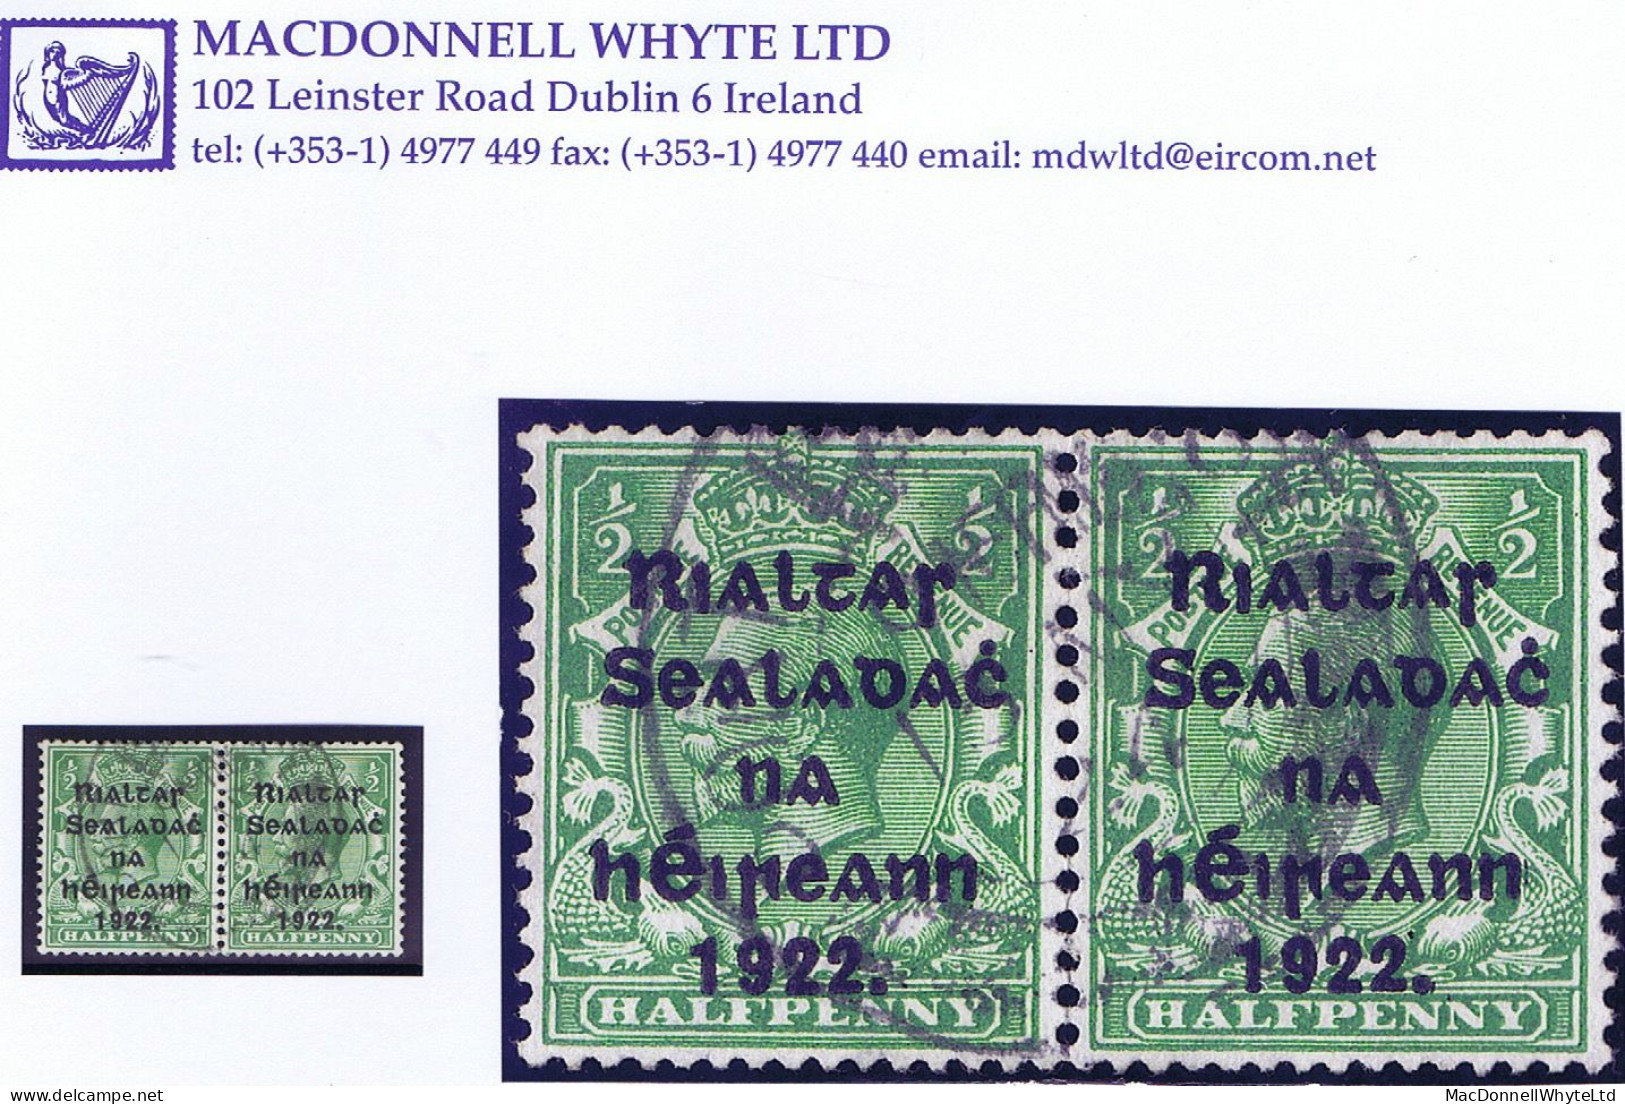 Ireland 1922 Harrison Rialtas 5-line Coils ½d Green Horizontal Pair Fine Used 1924 PORT LAOIGHISE Cds - Gebruikt